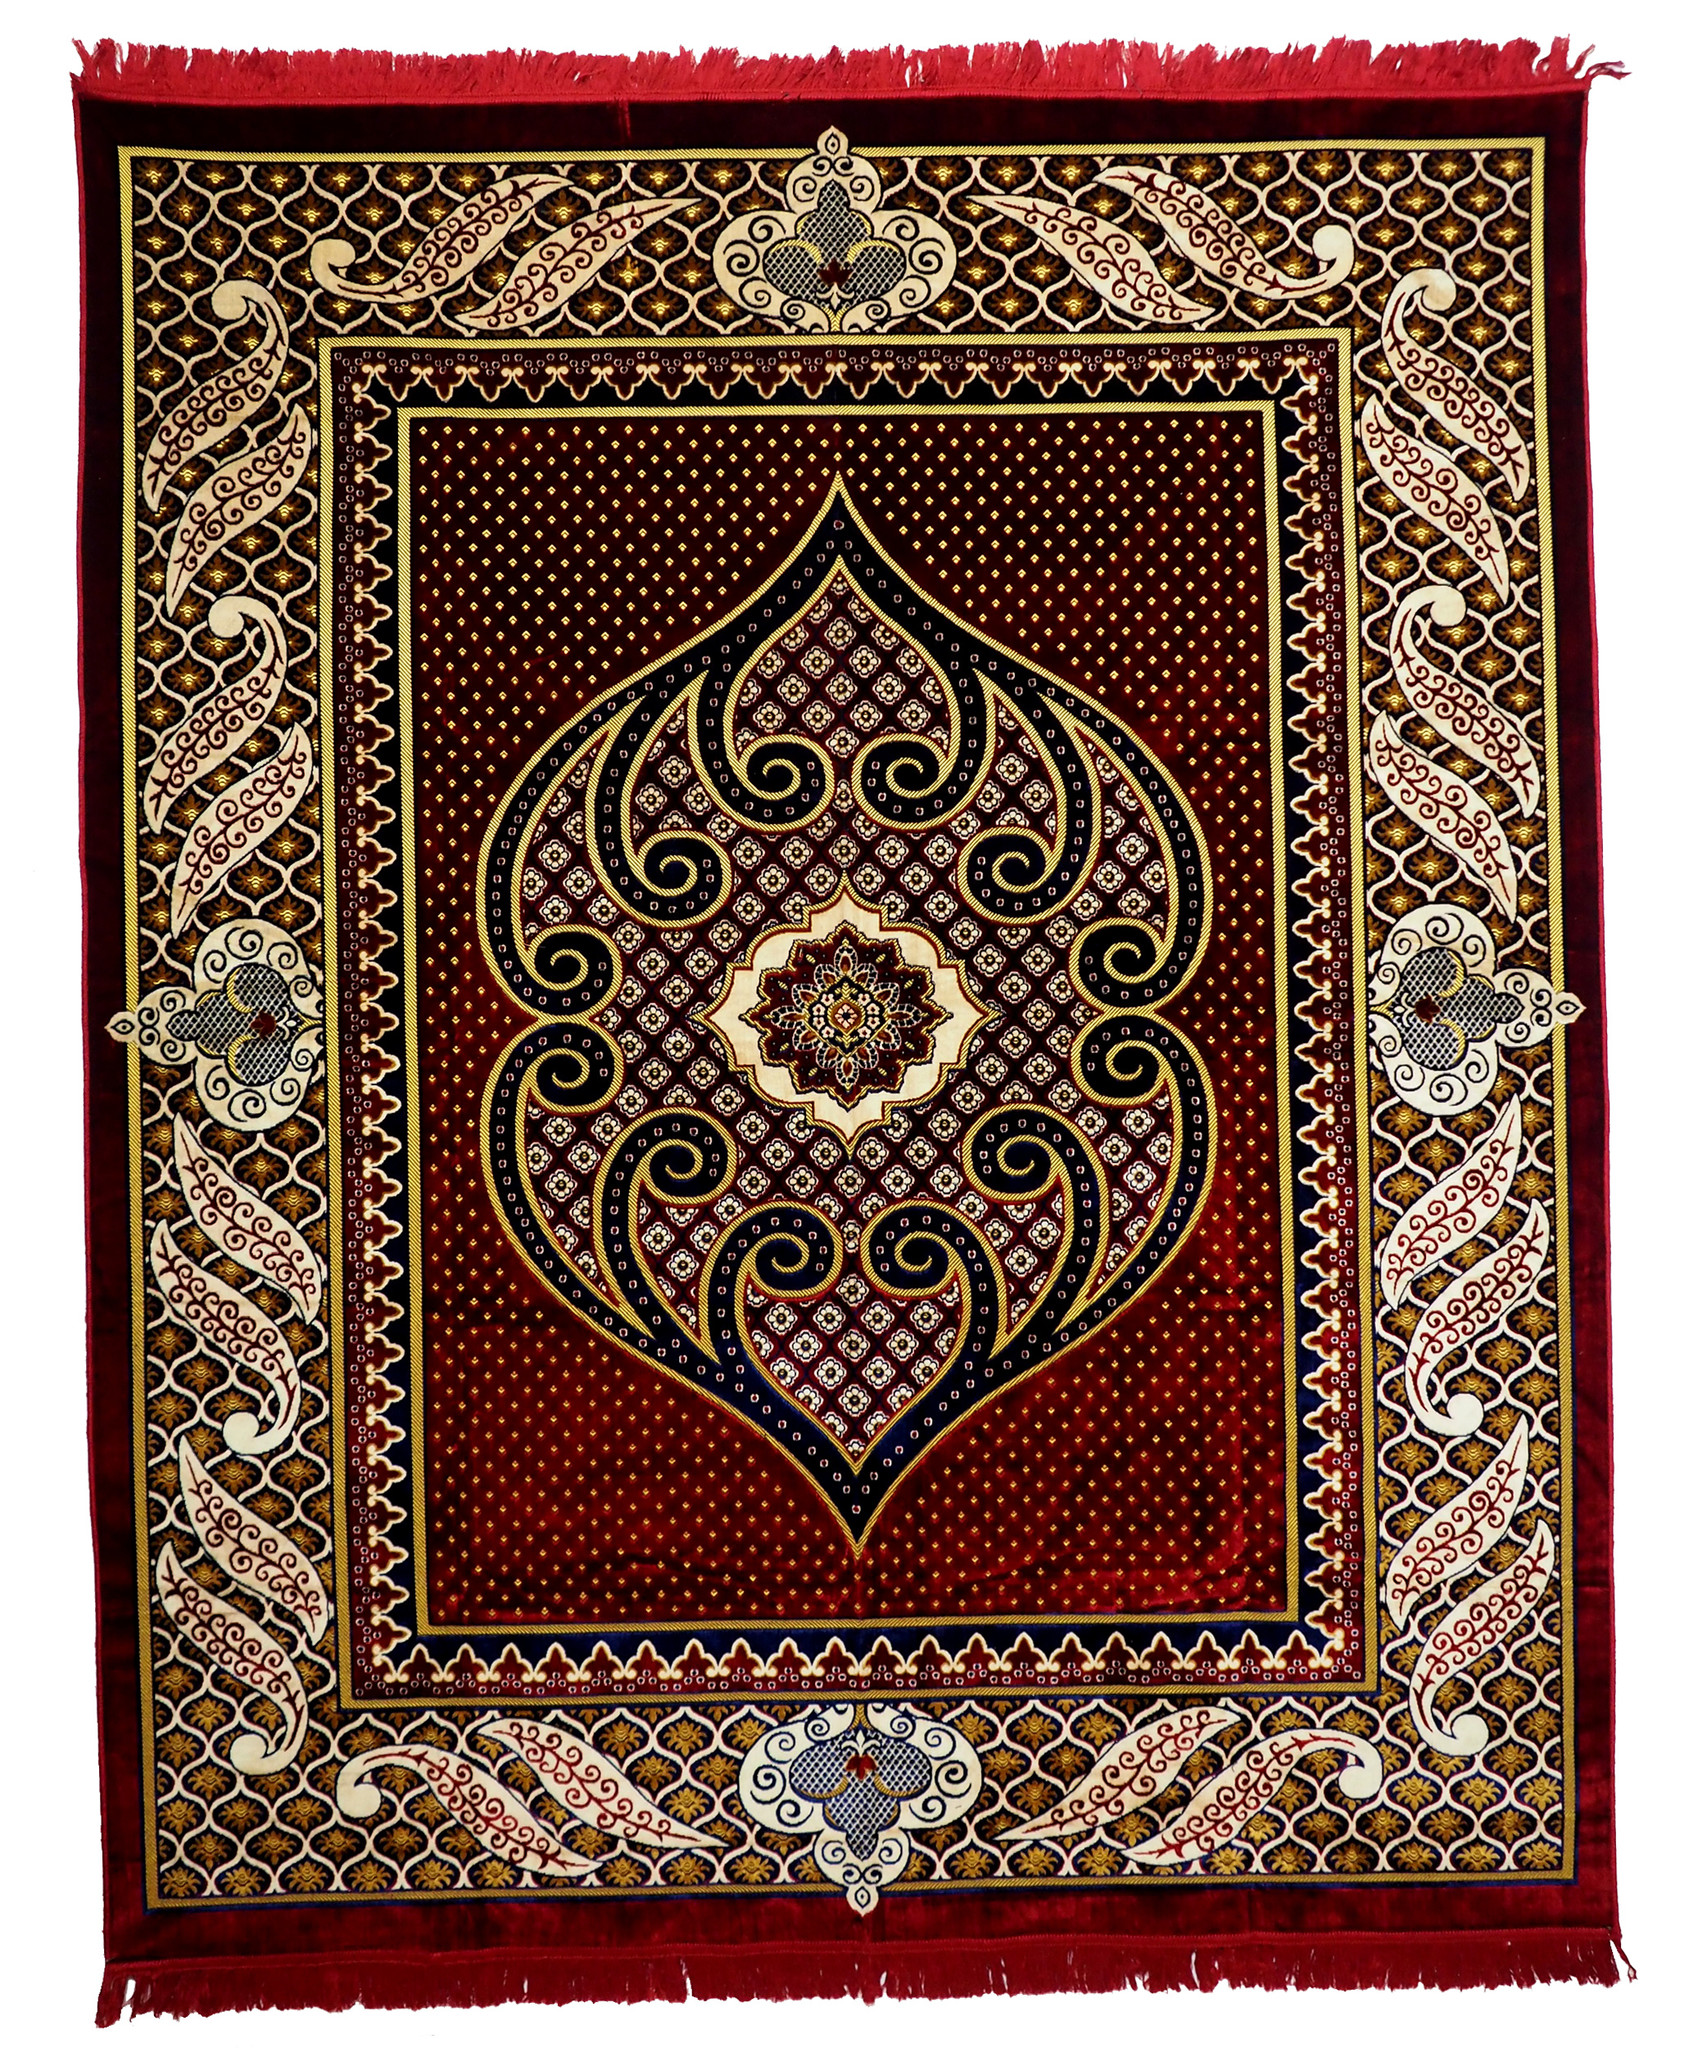 250x200 cm velvety Carpet rug for oriental Sitting area Arabic majlis nomadic bedouin floor seating floor 1001-night  machine manufactured